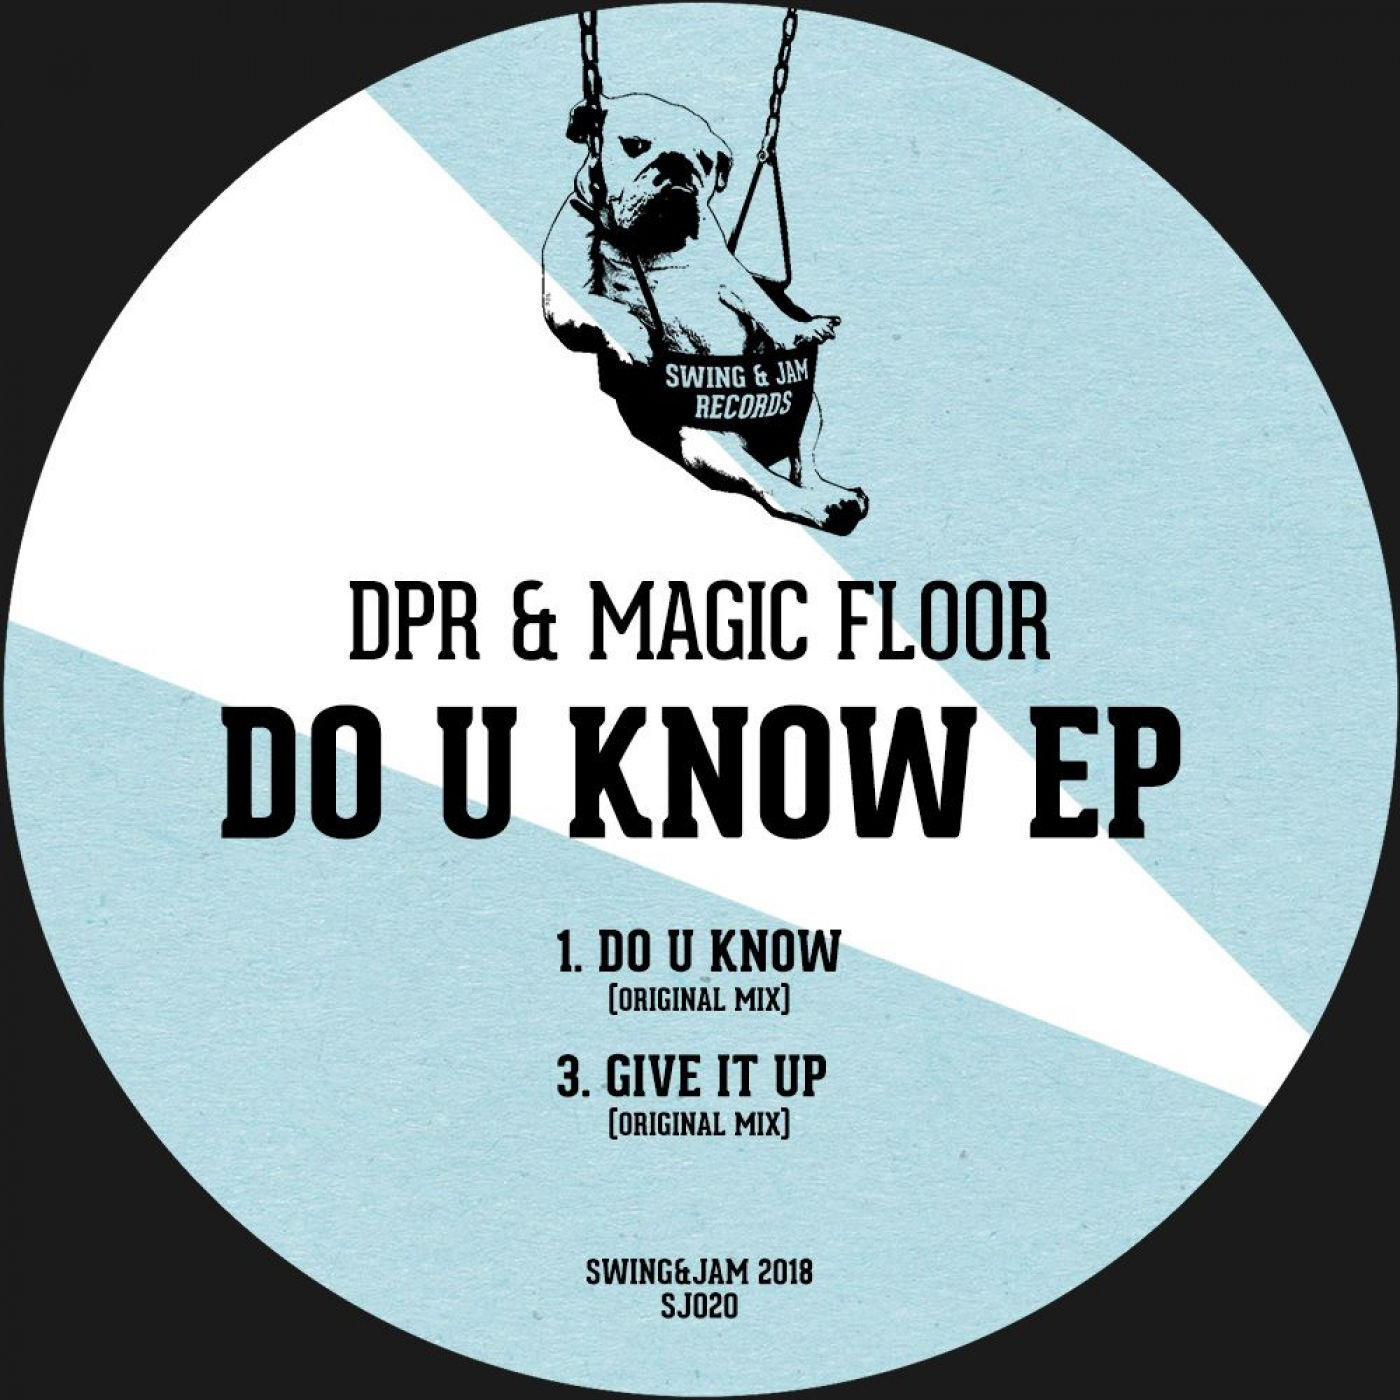 DPR & MAGIC FLOOR - Do U Know EP / Swing & Jam Records